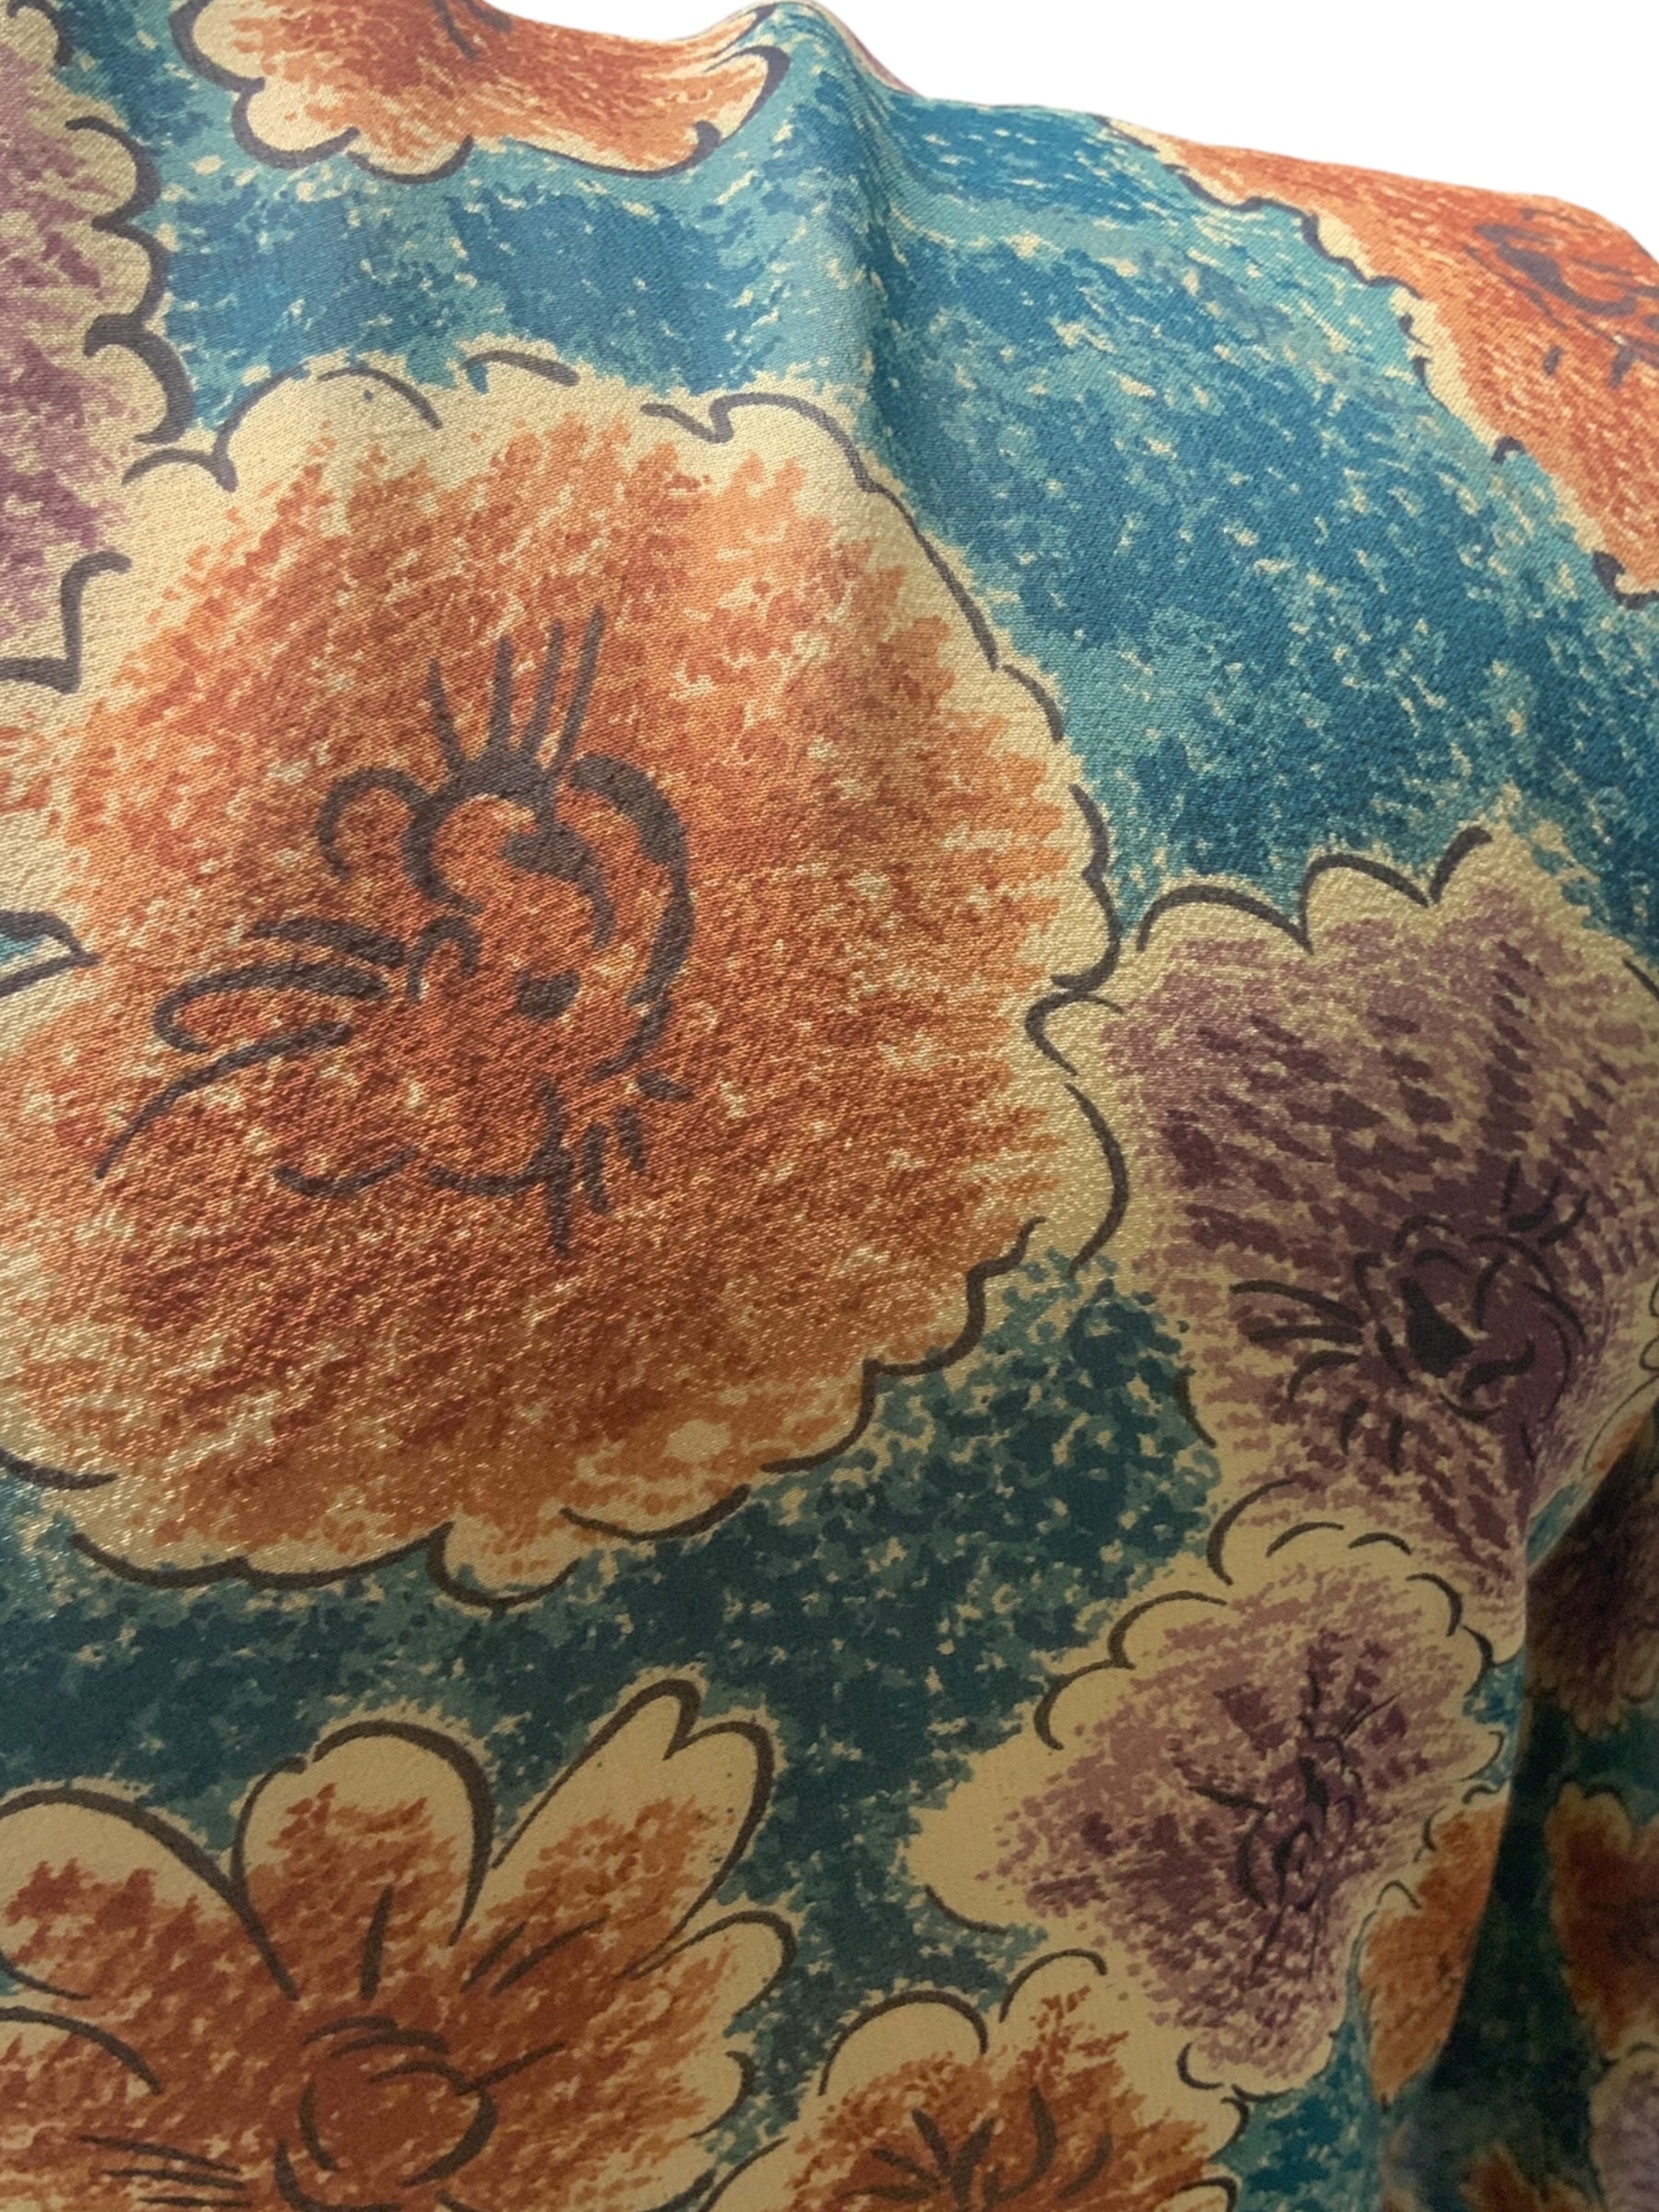 PRG1268 Avatar Pure Silk Kimono-Sleeved Jacket with Belt